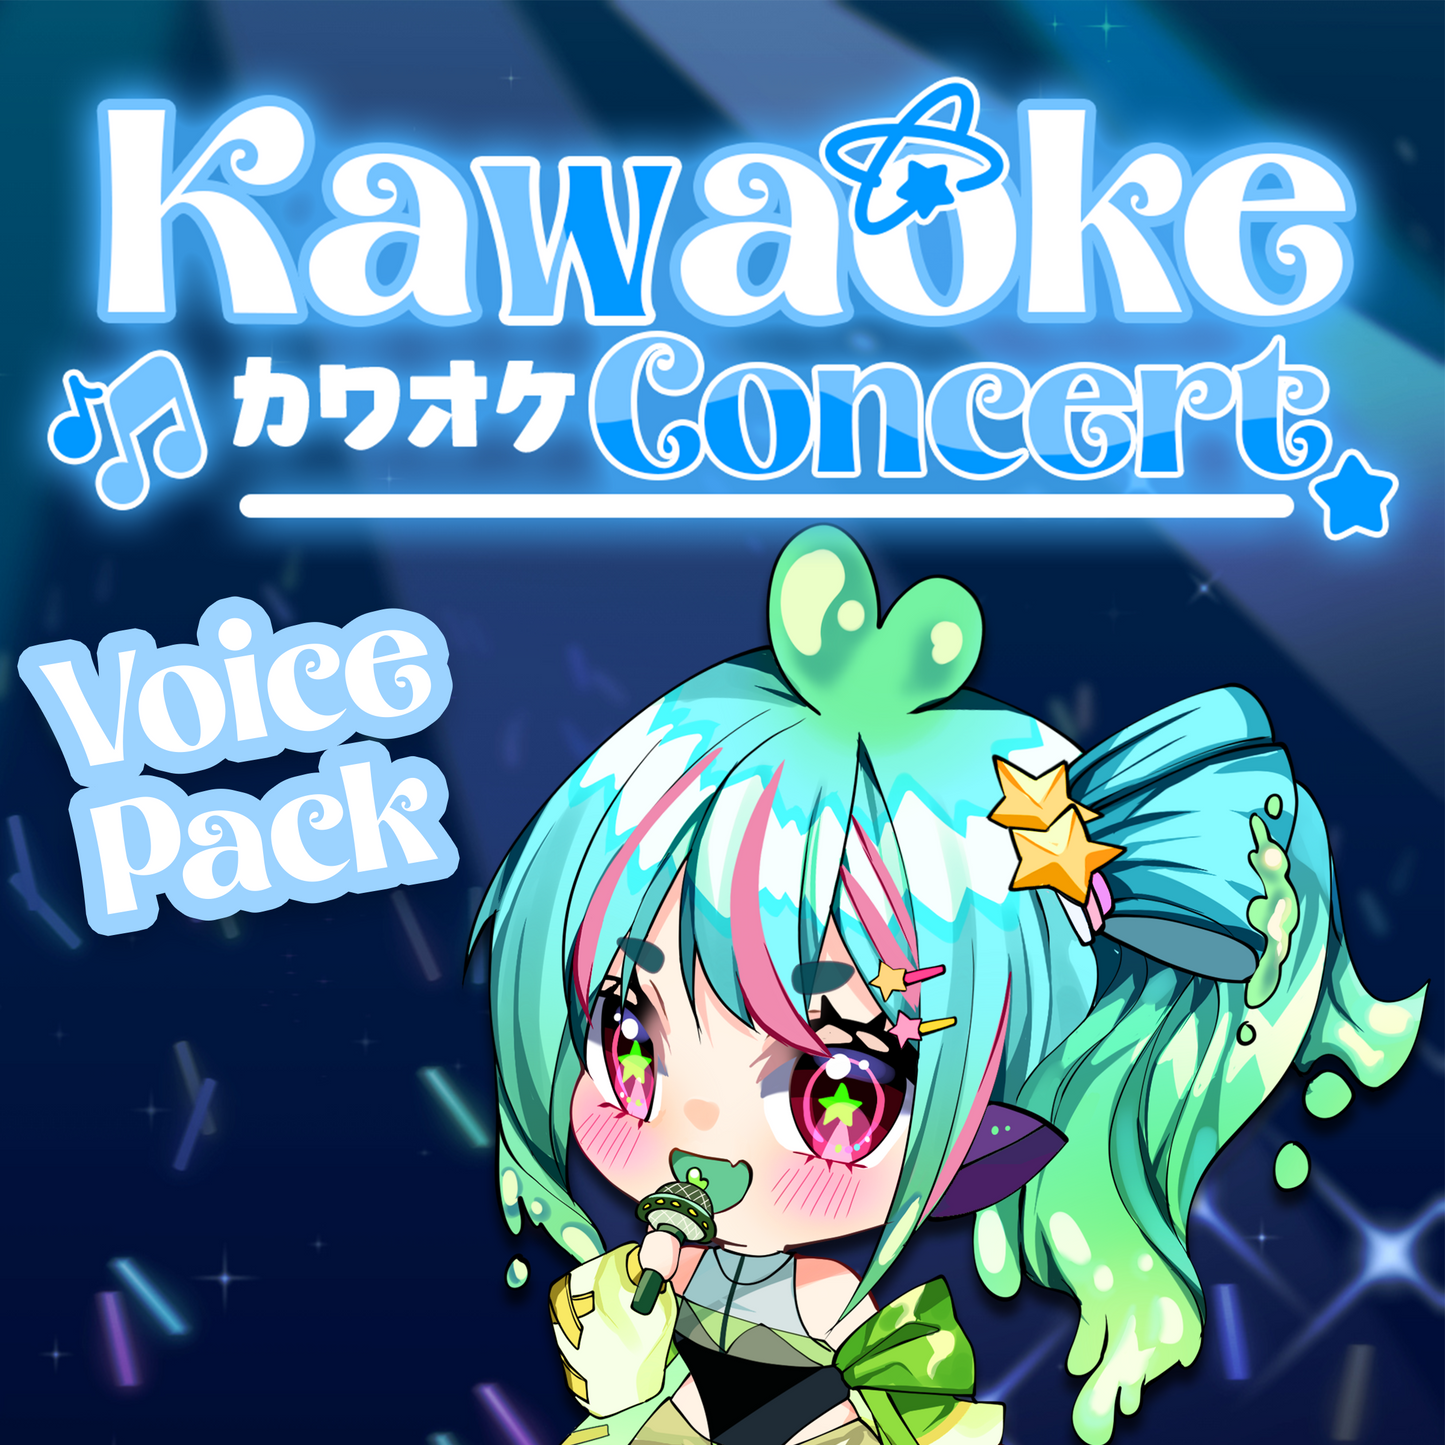 PiaPi UFO : Kawaoke Concert Voice Pack